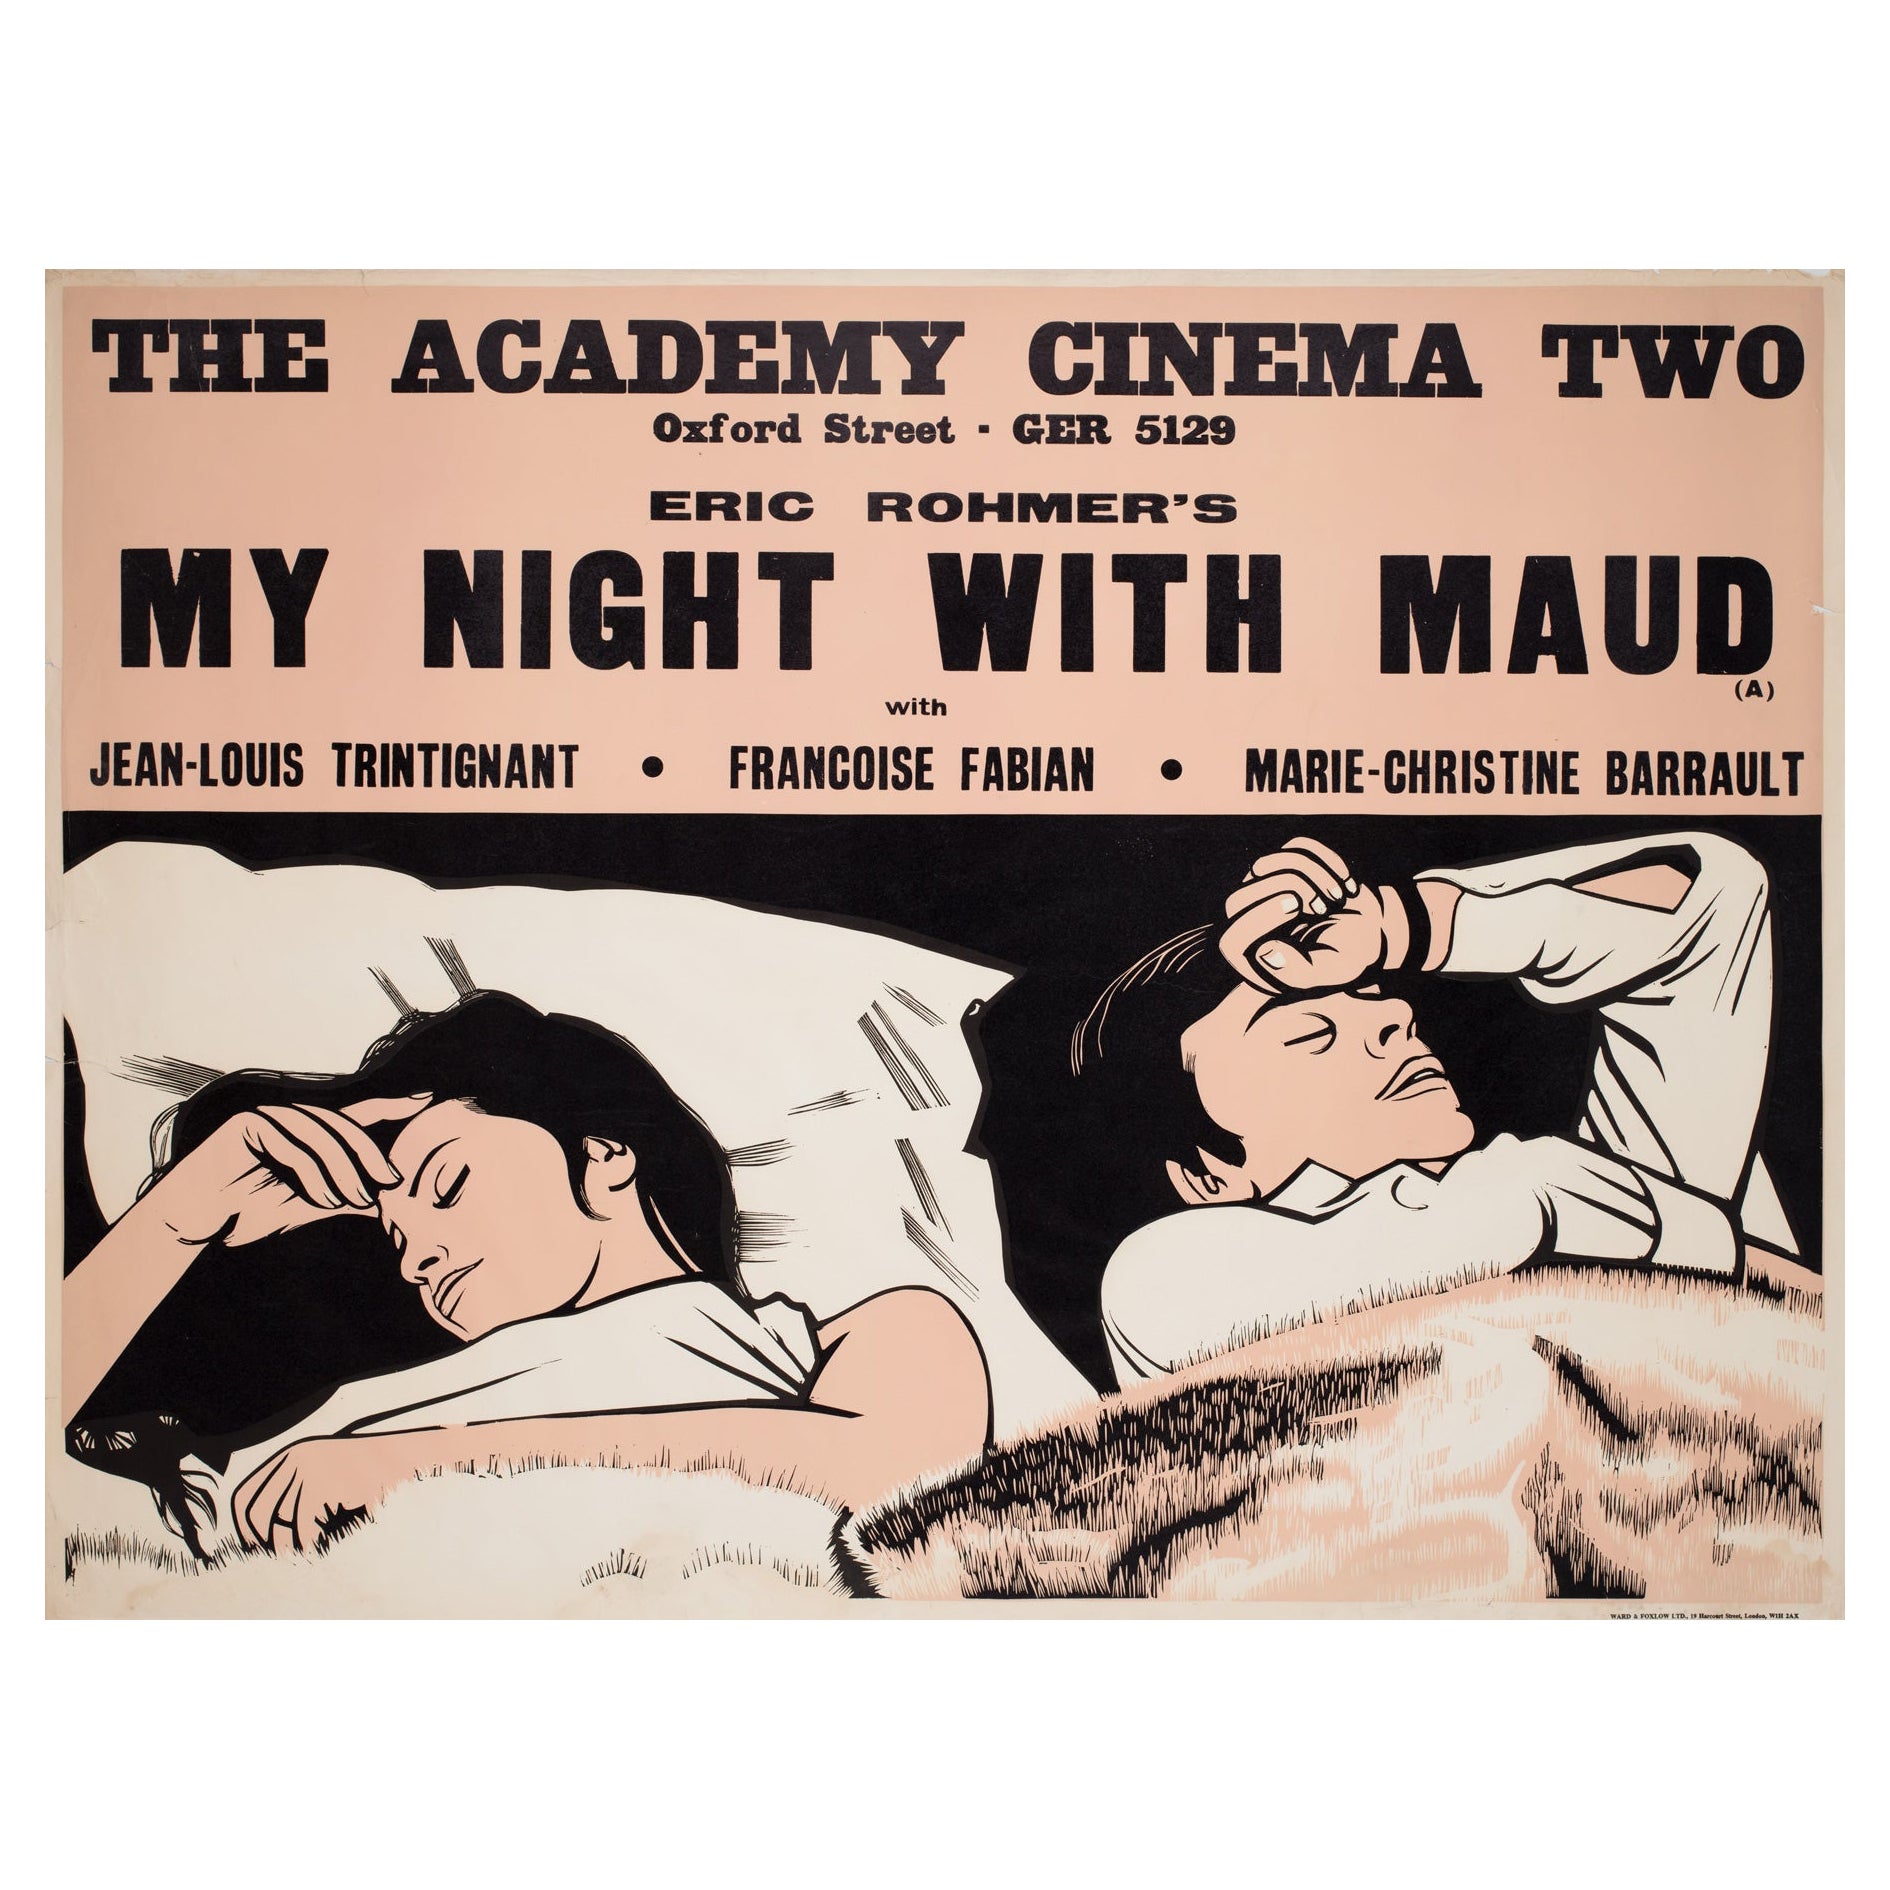 "My Night with Maud", 1971 Academy Cinema London UK Quad Film Poster, Strausfeld For Sale